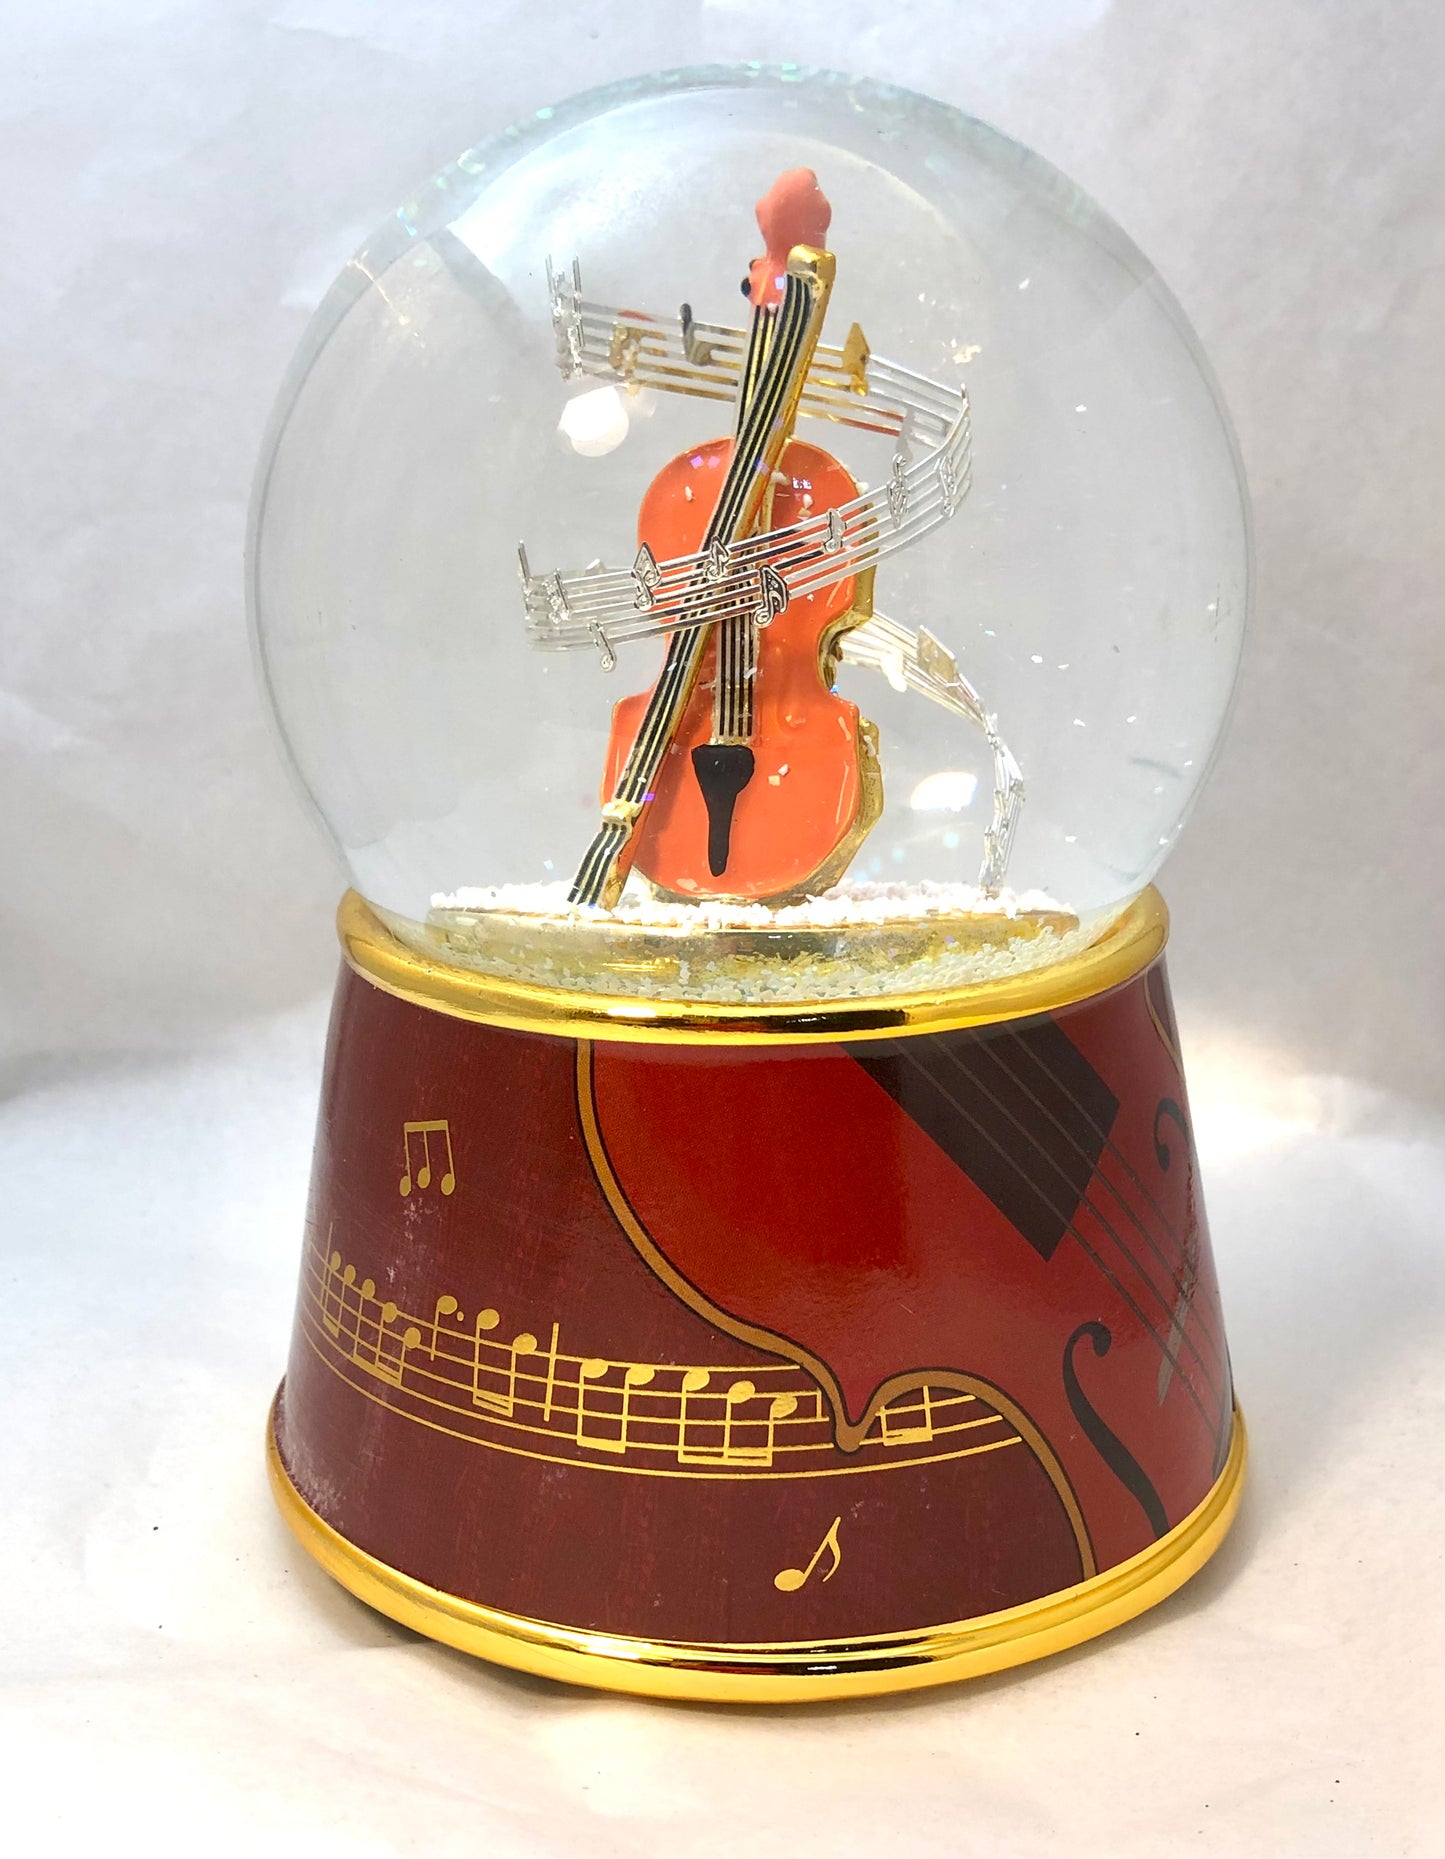 Snow globe with violin